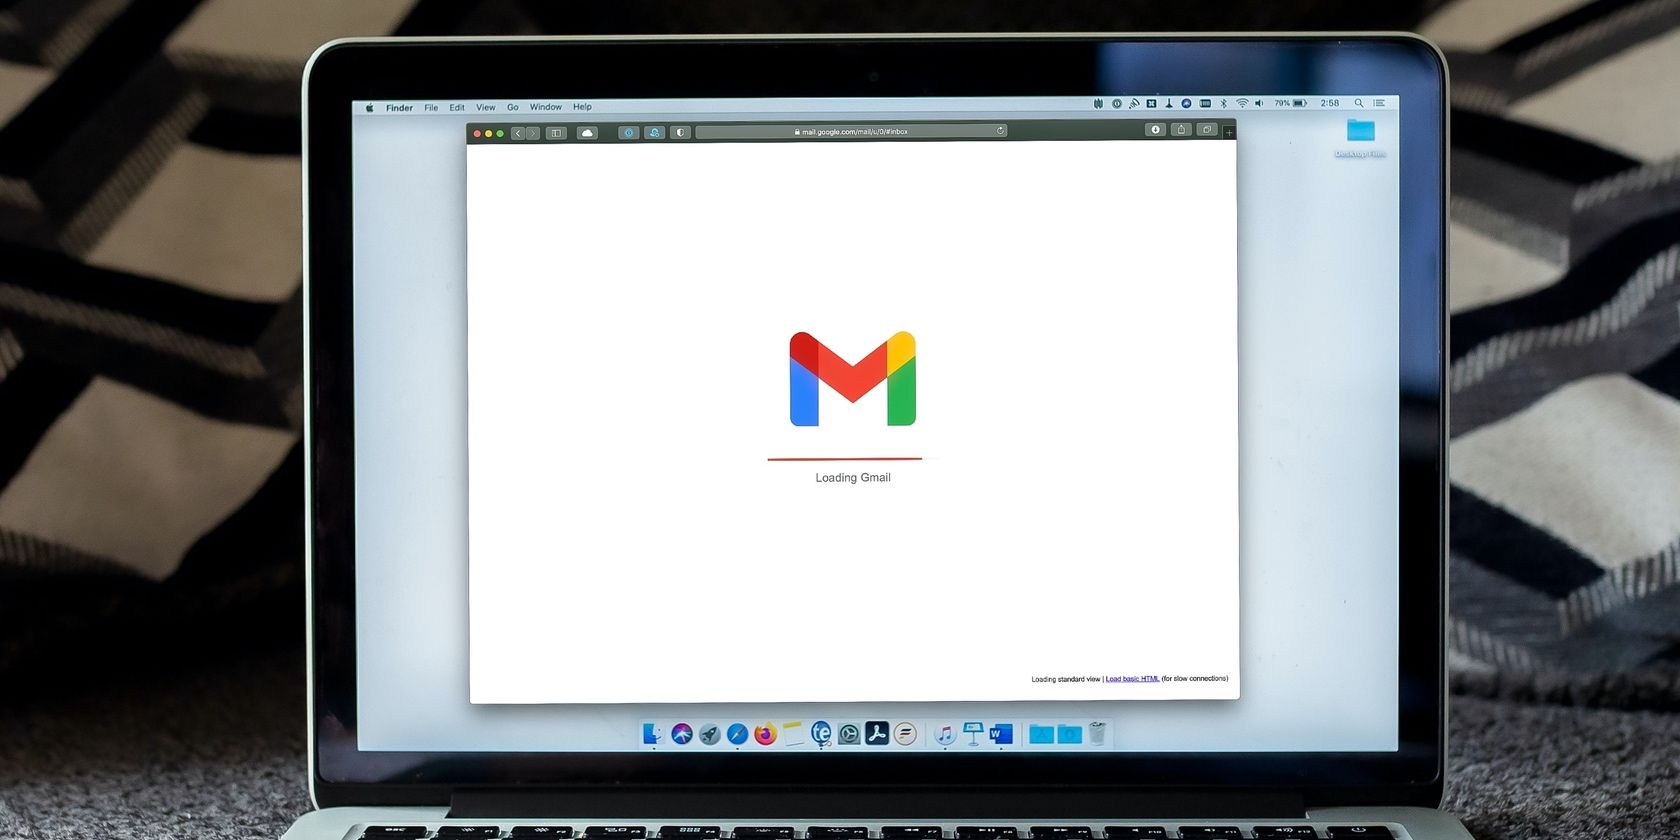 gmail website on laptop screen